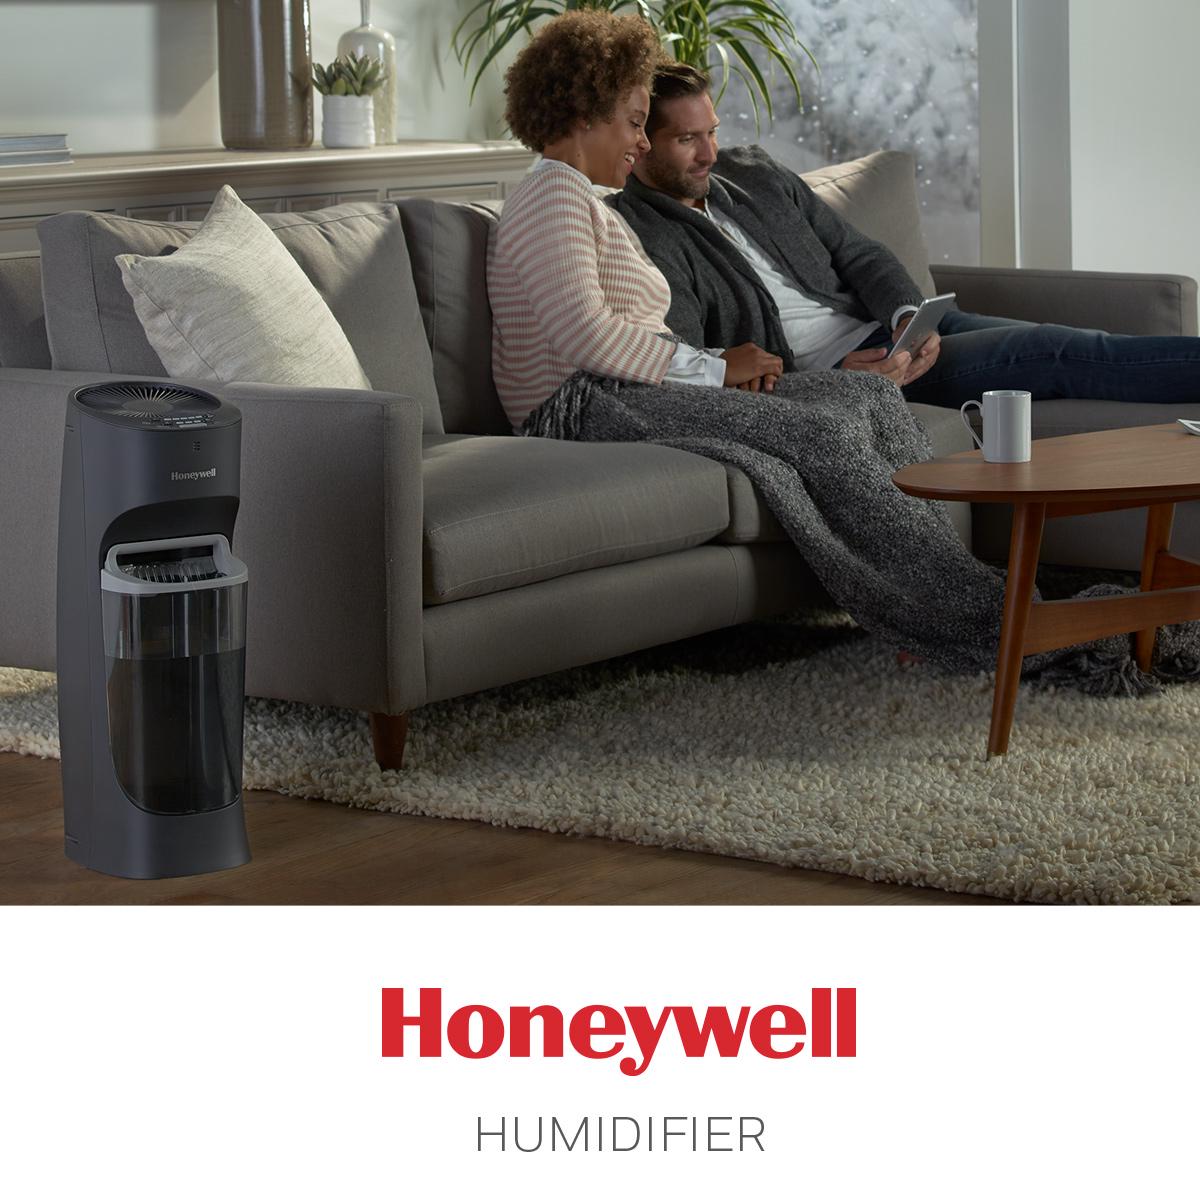 Honeywell Cool Moisture Humidifier with Humidistat， Black， HEV615